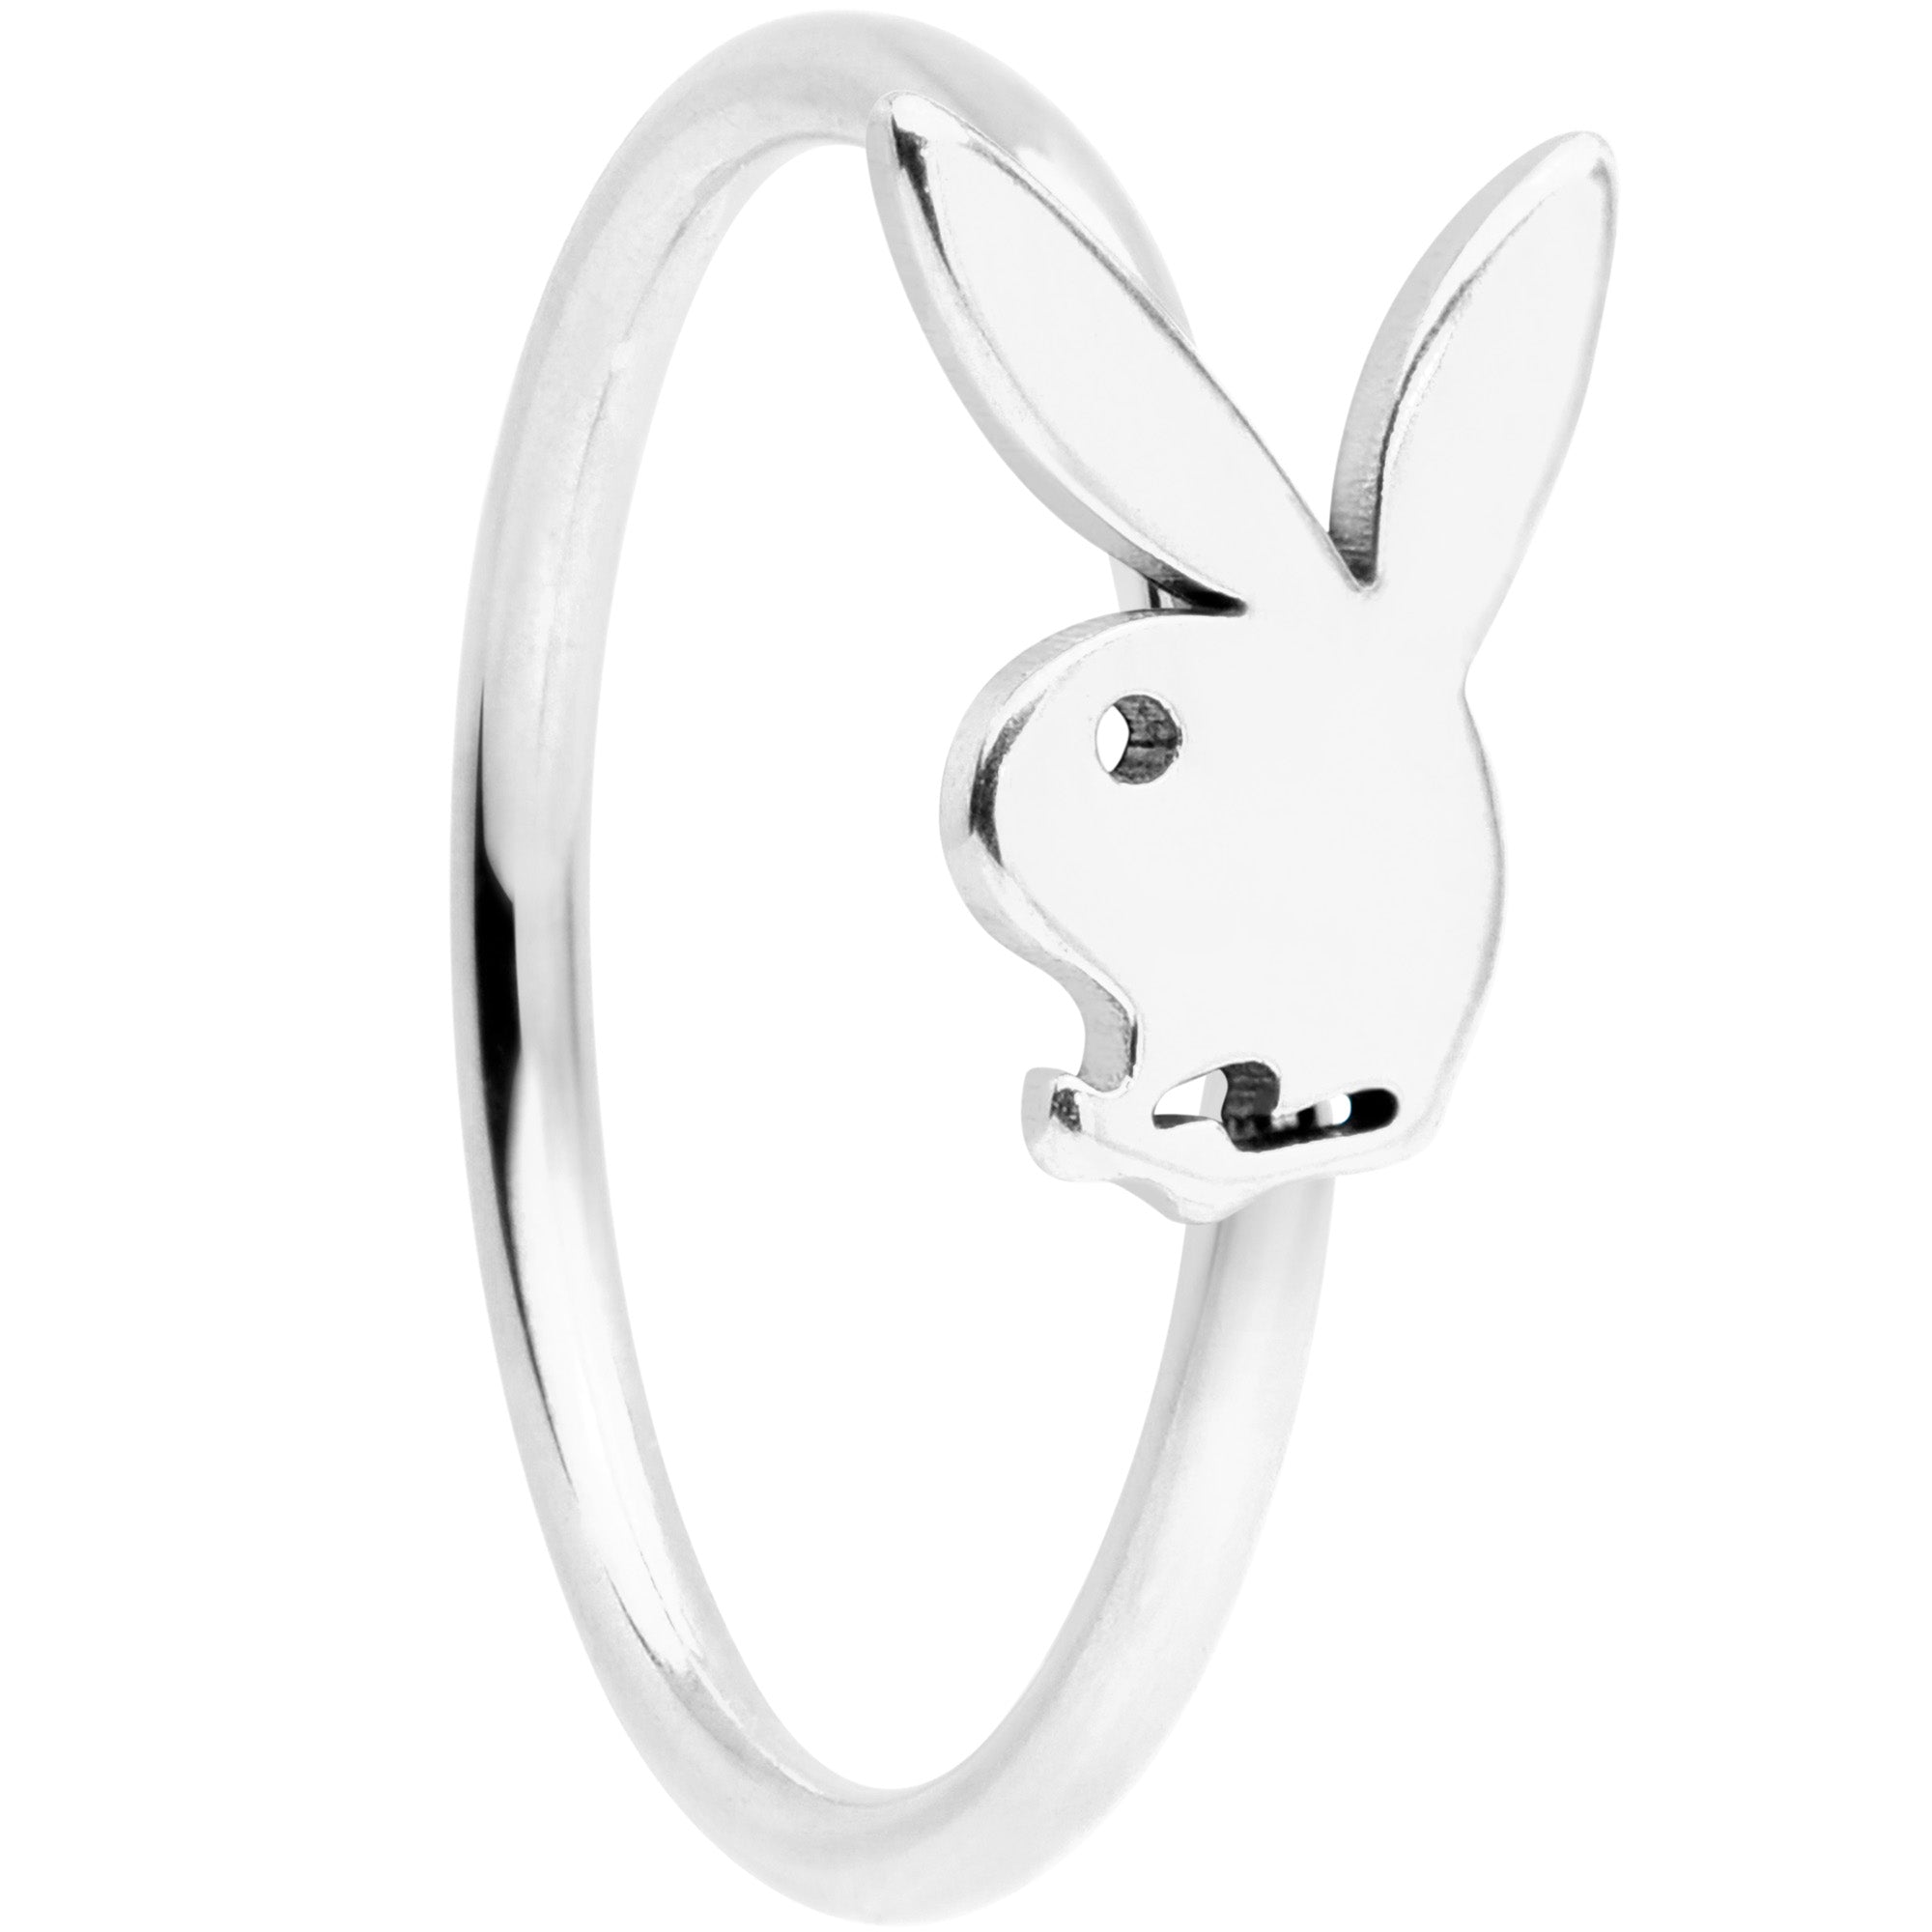 20 Gauge 5/16 Licensed Playboy Bunny Nose Hoop